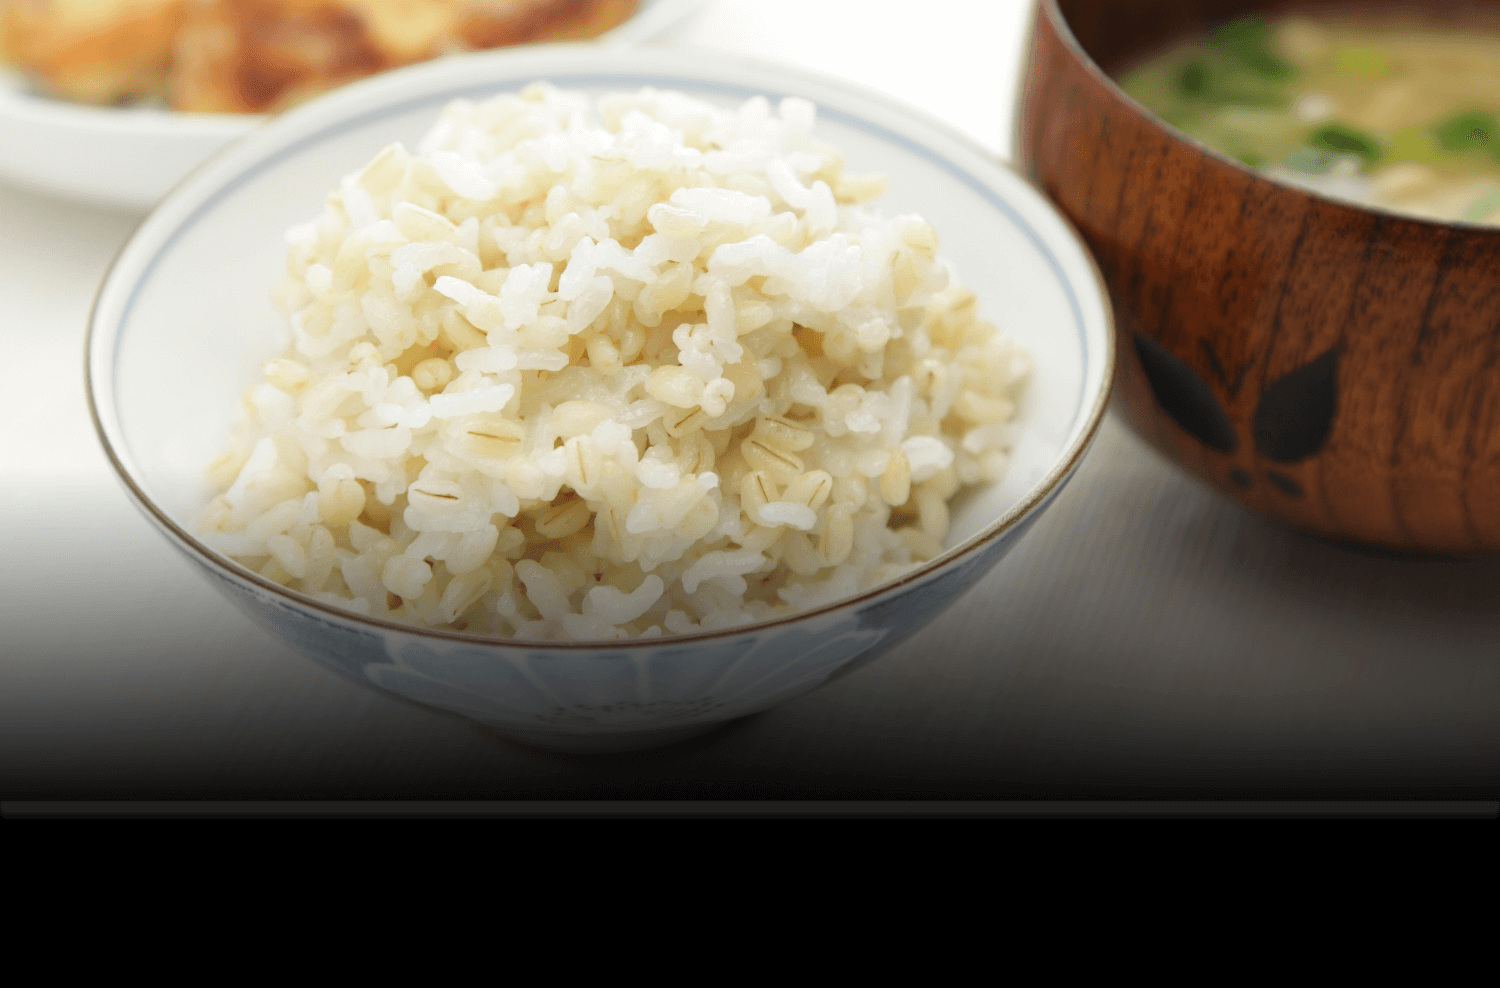 “Barley Rice” setting